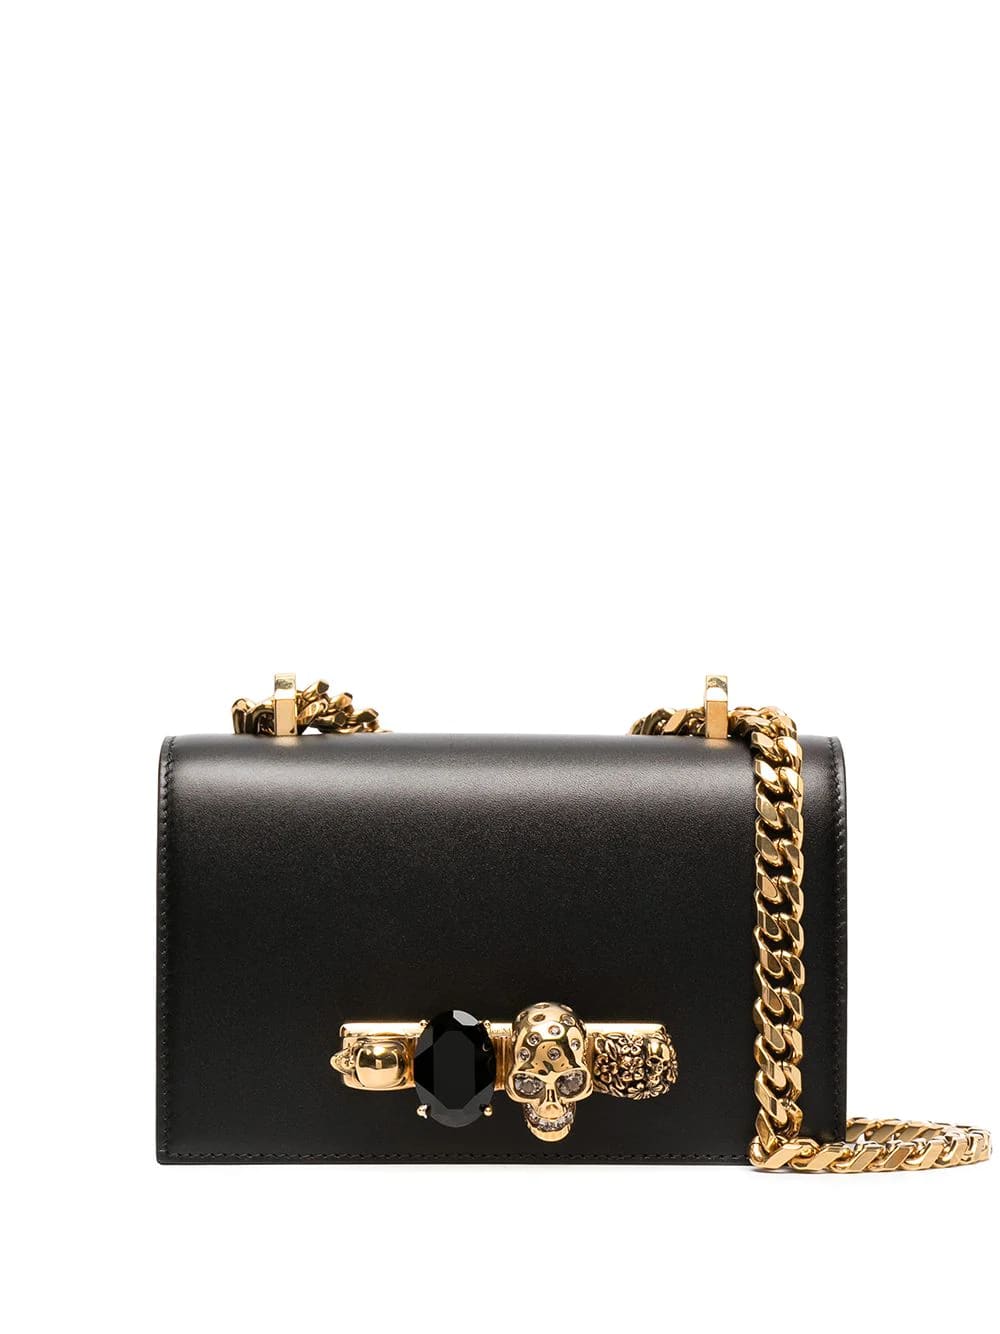 Alexander McQueen Black And Gold Mini Jeweled Satchel Bag